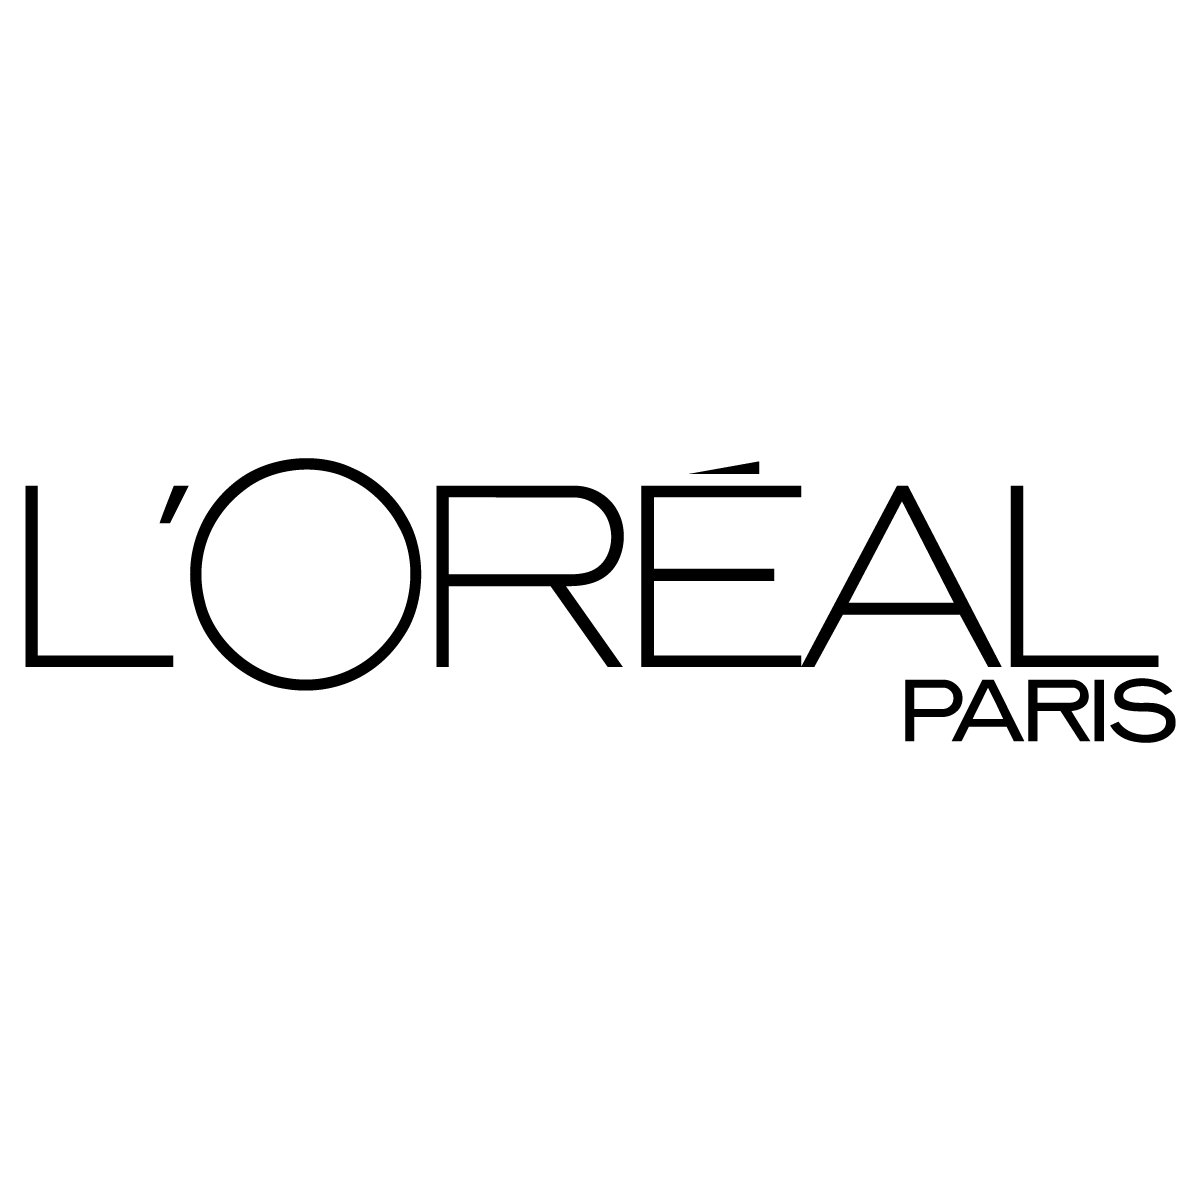 L'Oreal Paris Logo - Loreal Paris Logo Vector | Free Vector Silhouette Graphics AI EPS ...